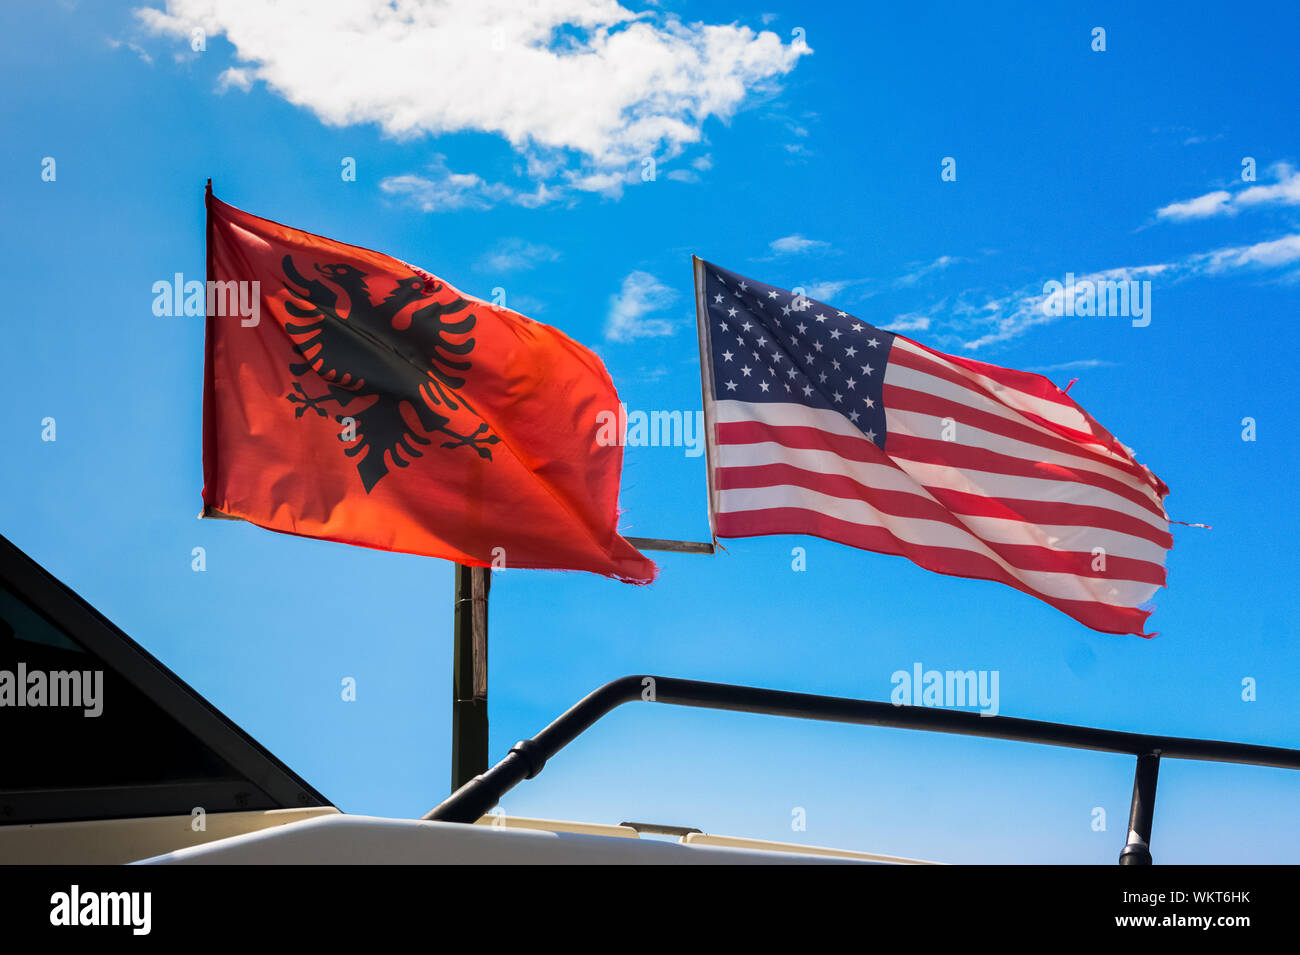 Albania flag with American flag Stock Photo